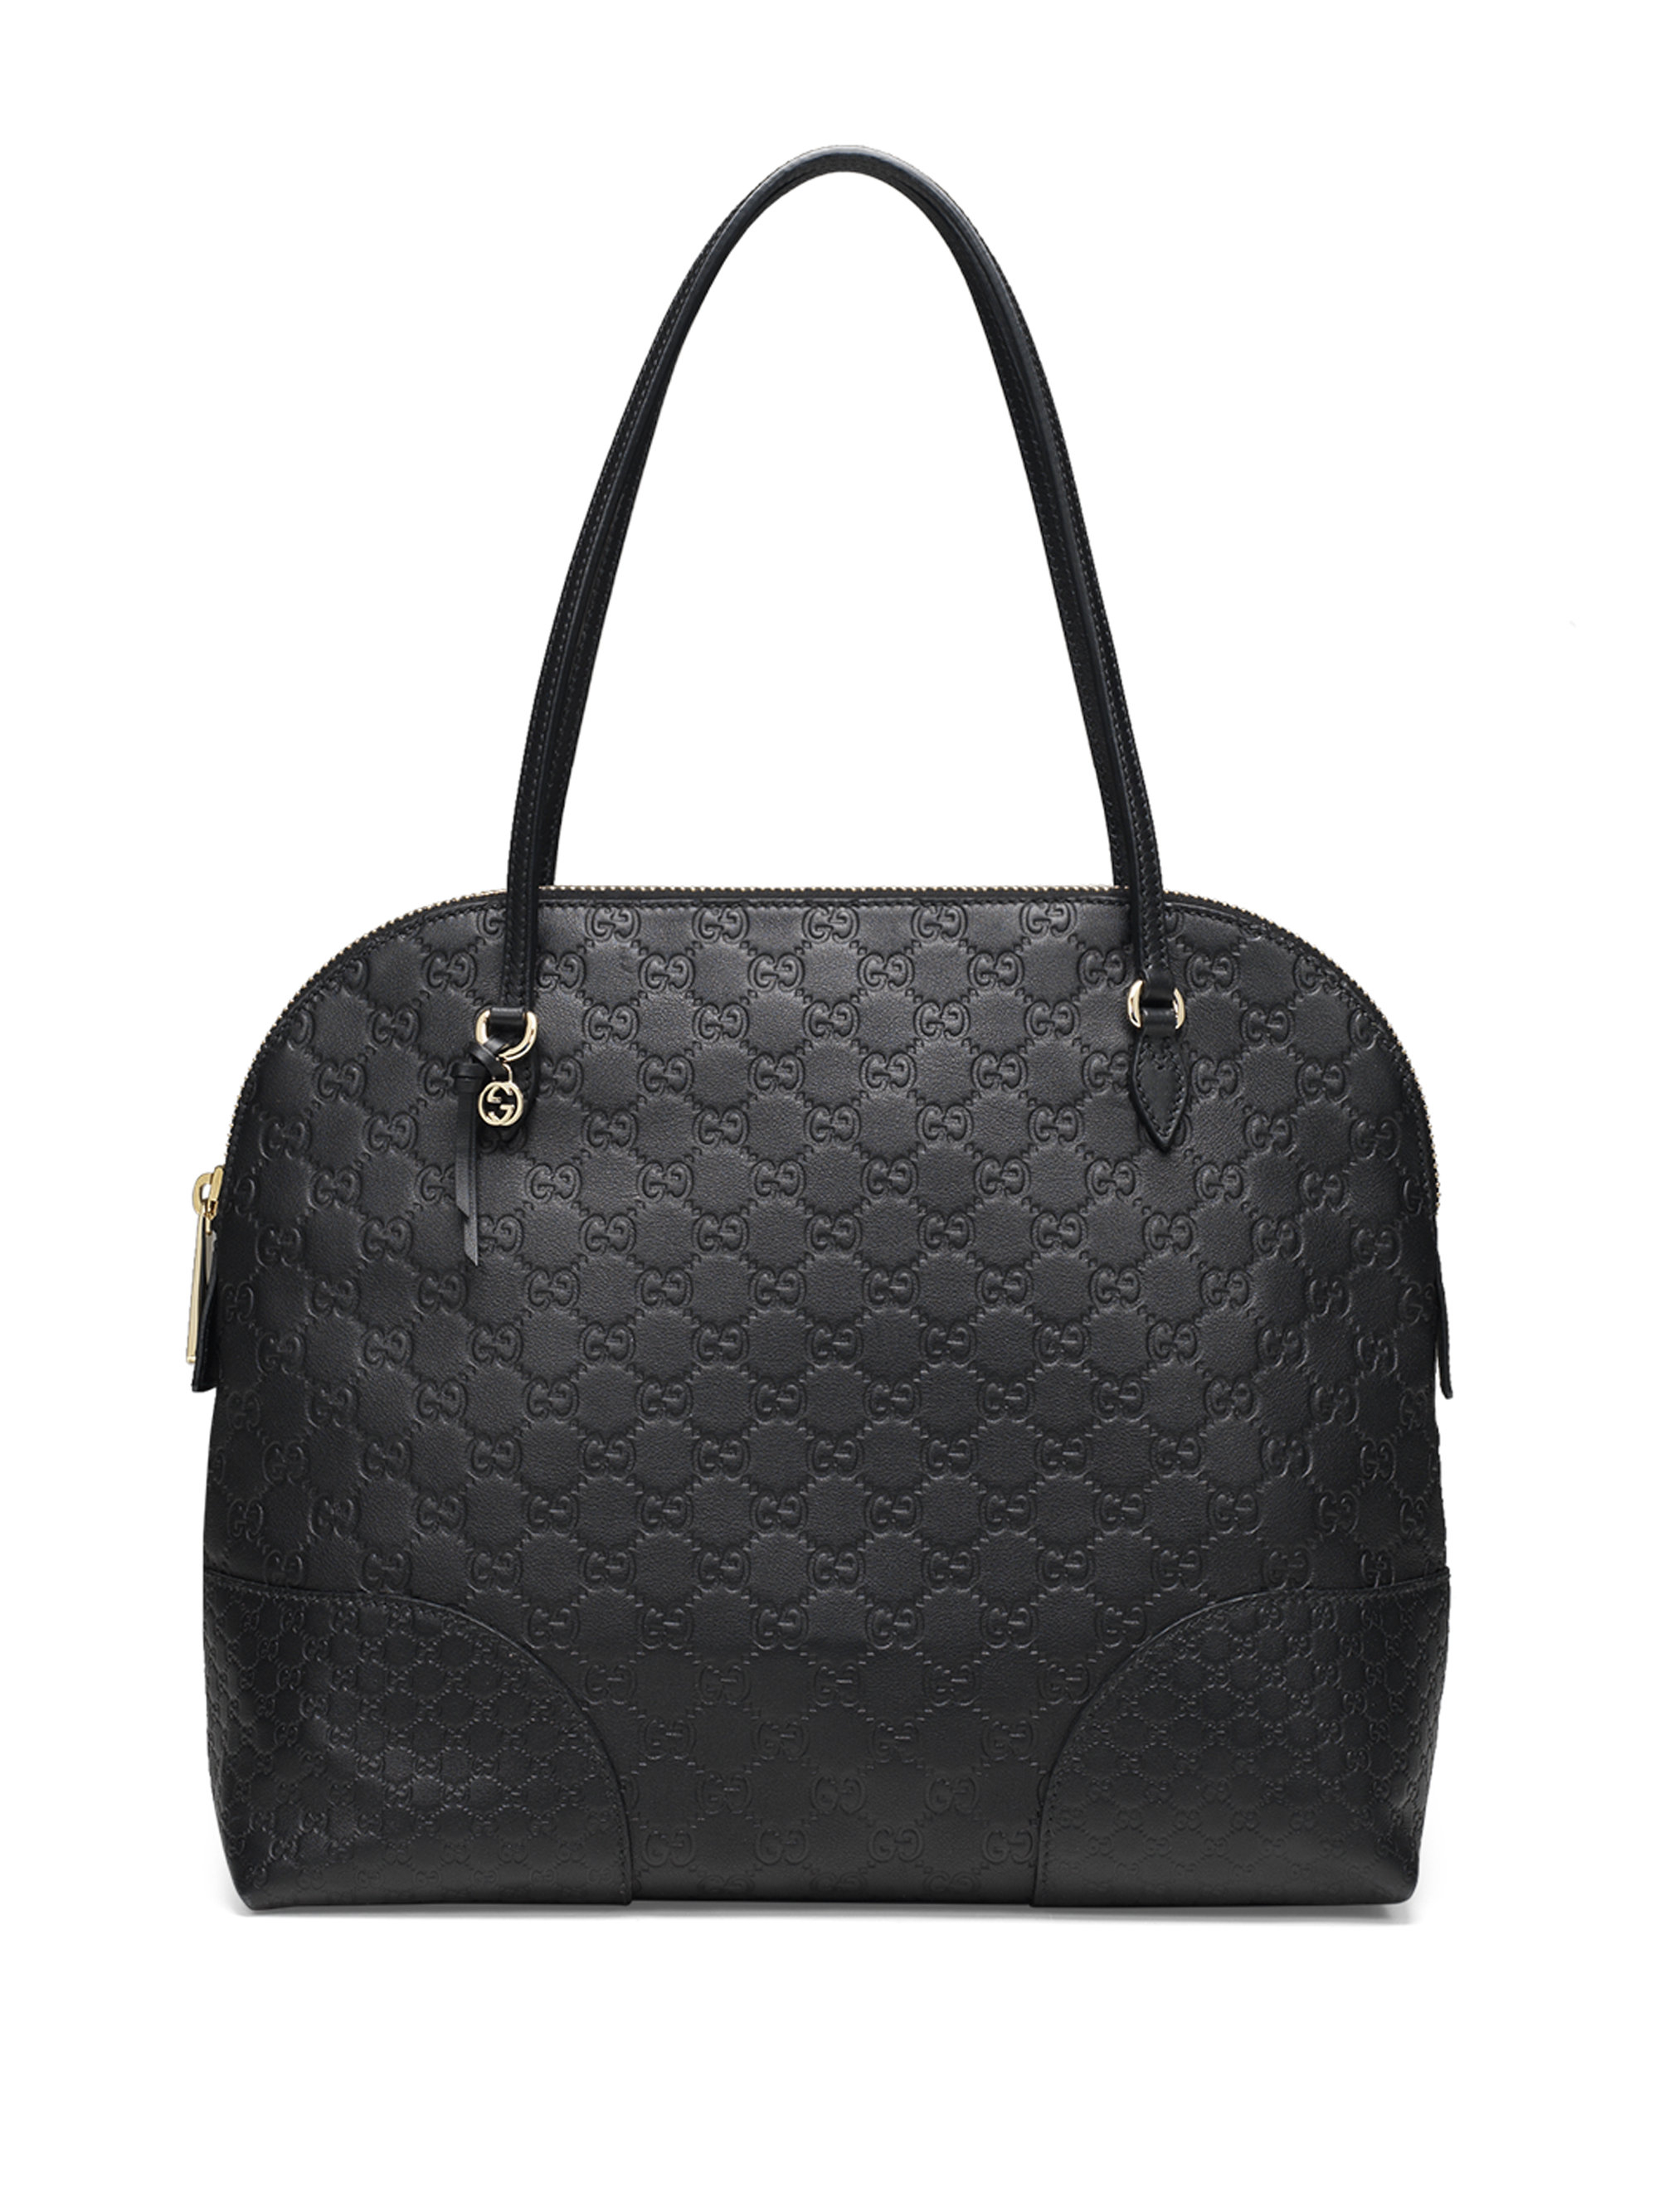 Lyst - Gucci Bree Ssima Leather Shoulder Bag in Black